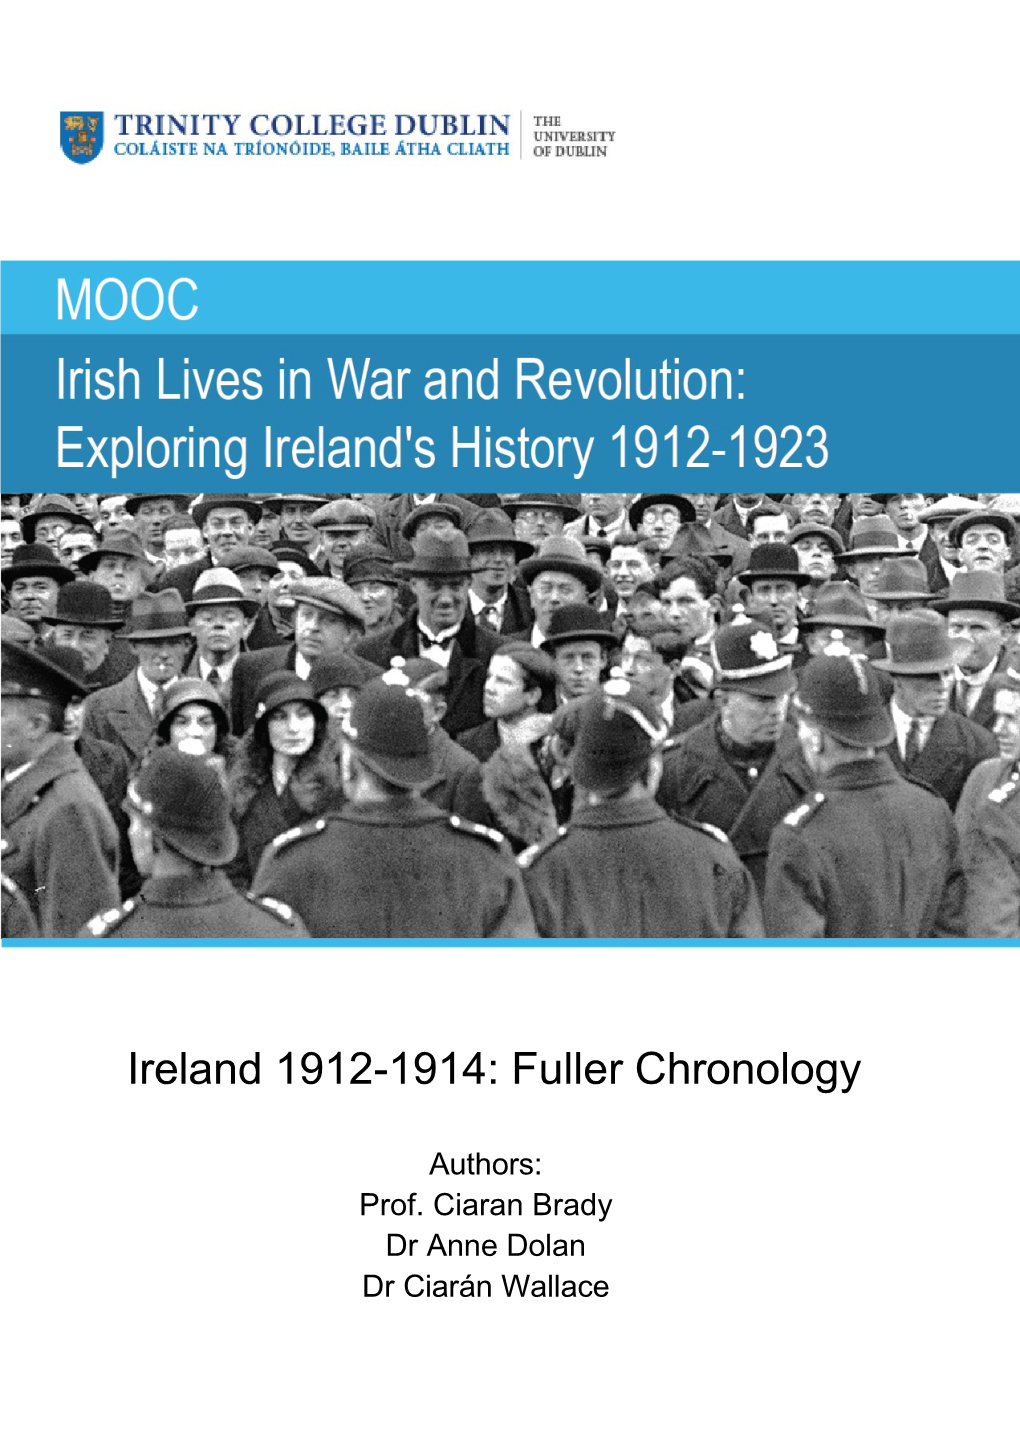 Ireland 1912-1914: Fuller Chronology